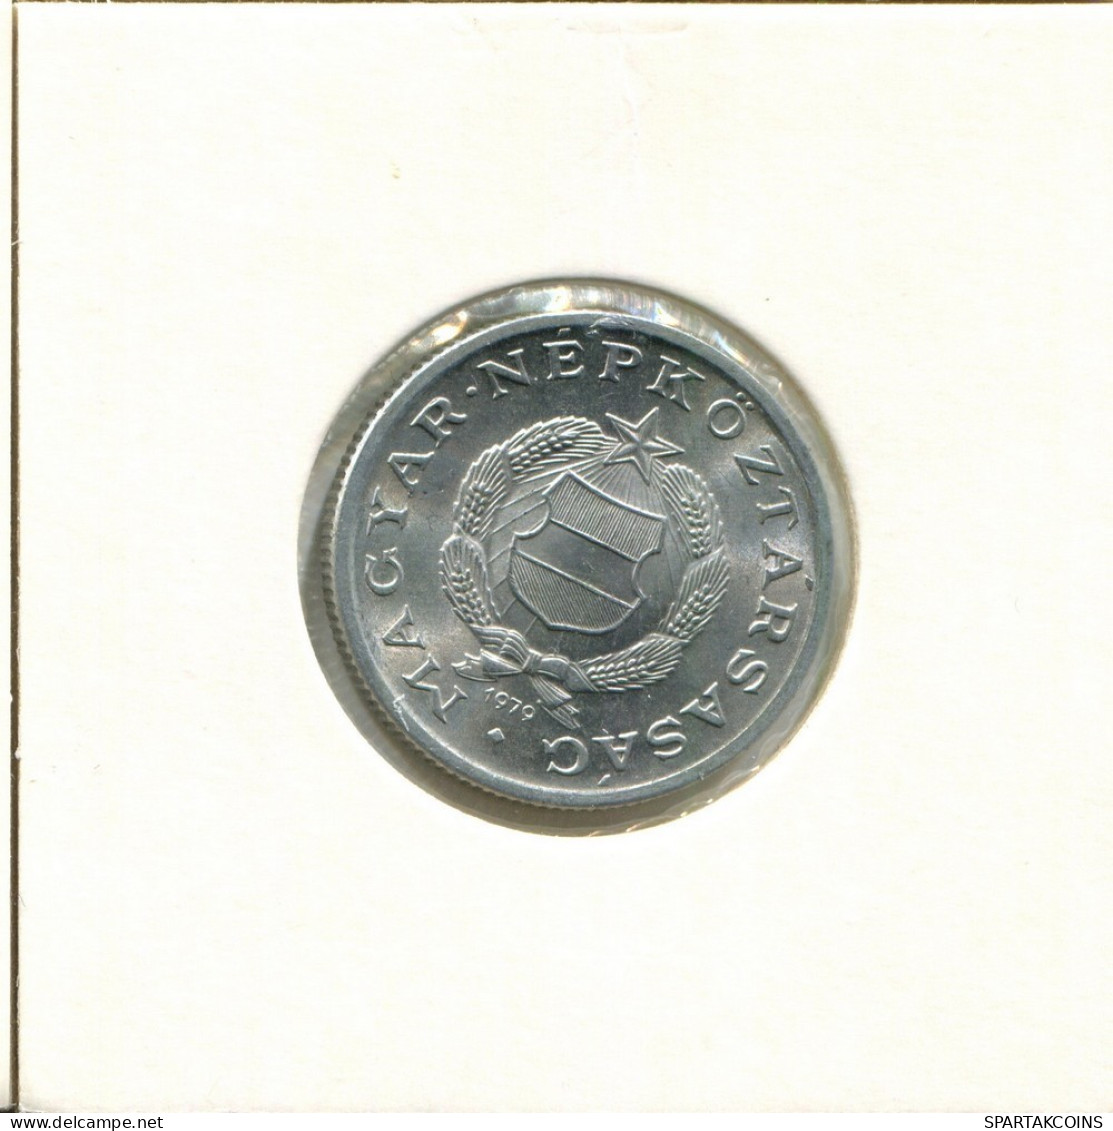 1 FORINT 1979 HUNGARY Coin #AY484.U.A - Hungary